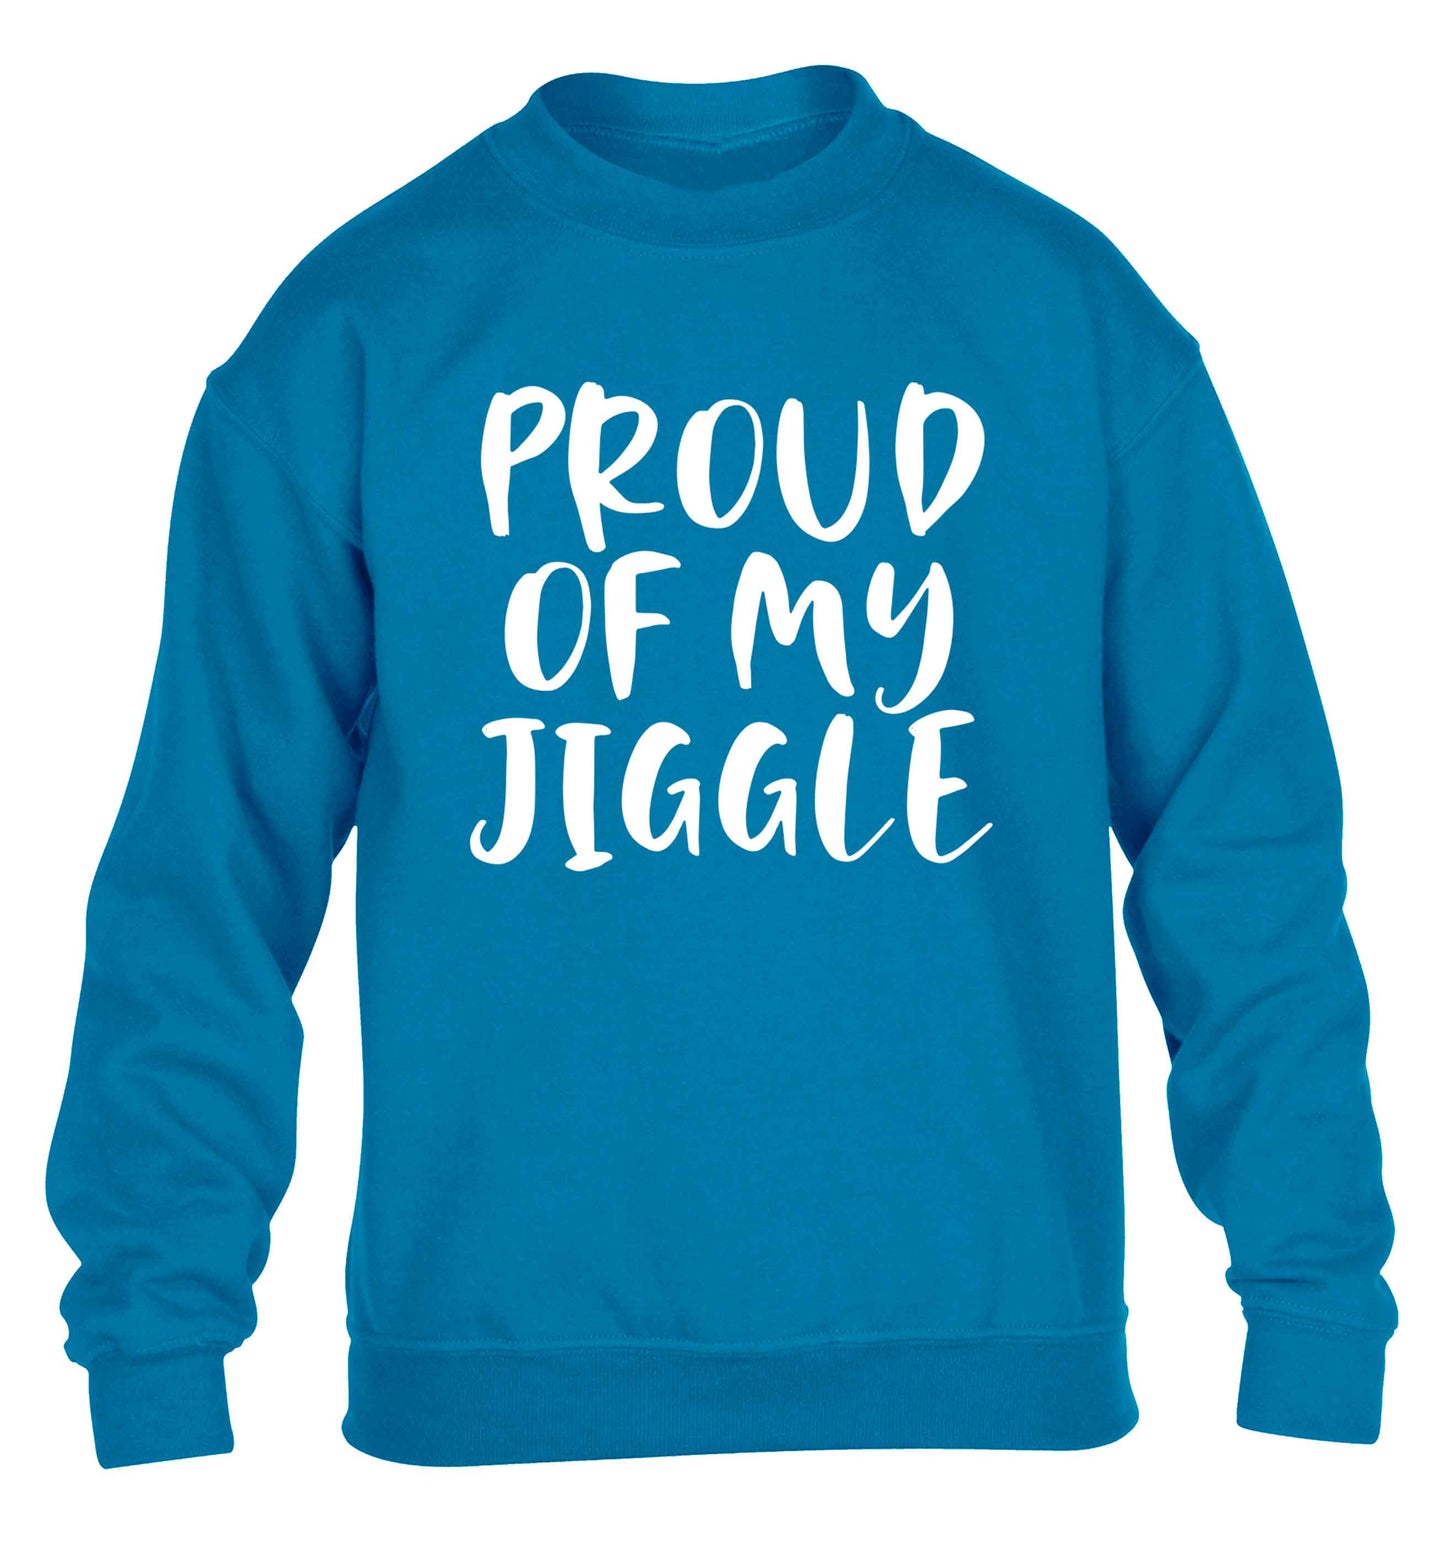 Proud of my jiggle children's blue sweater 12-13 Years